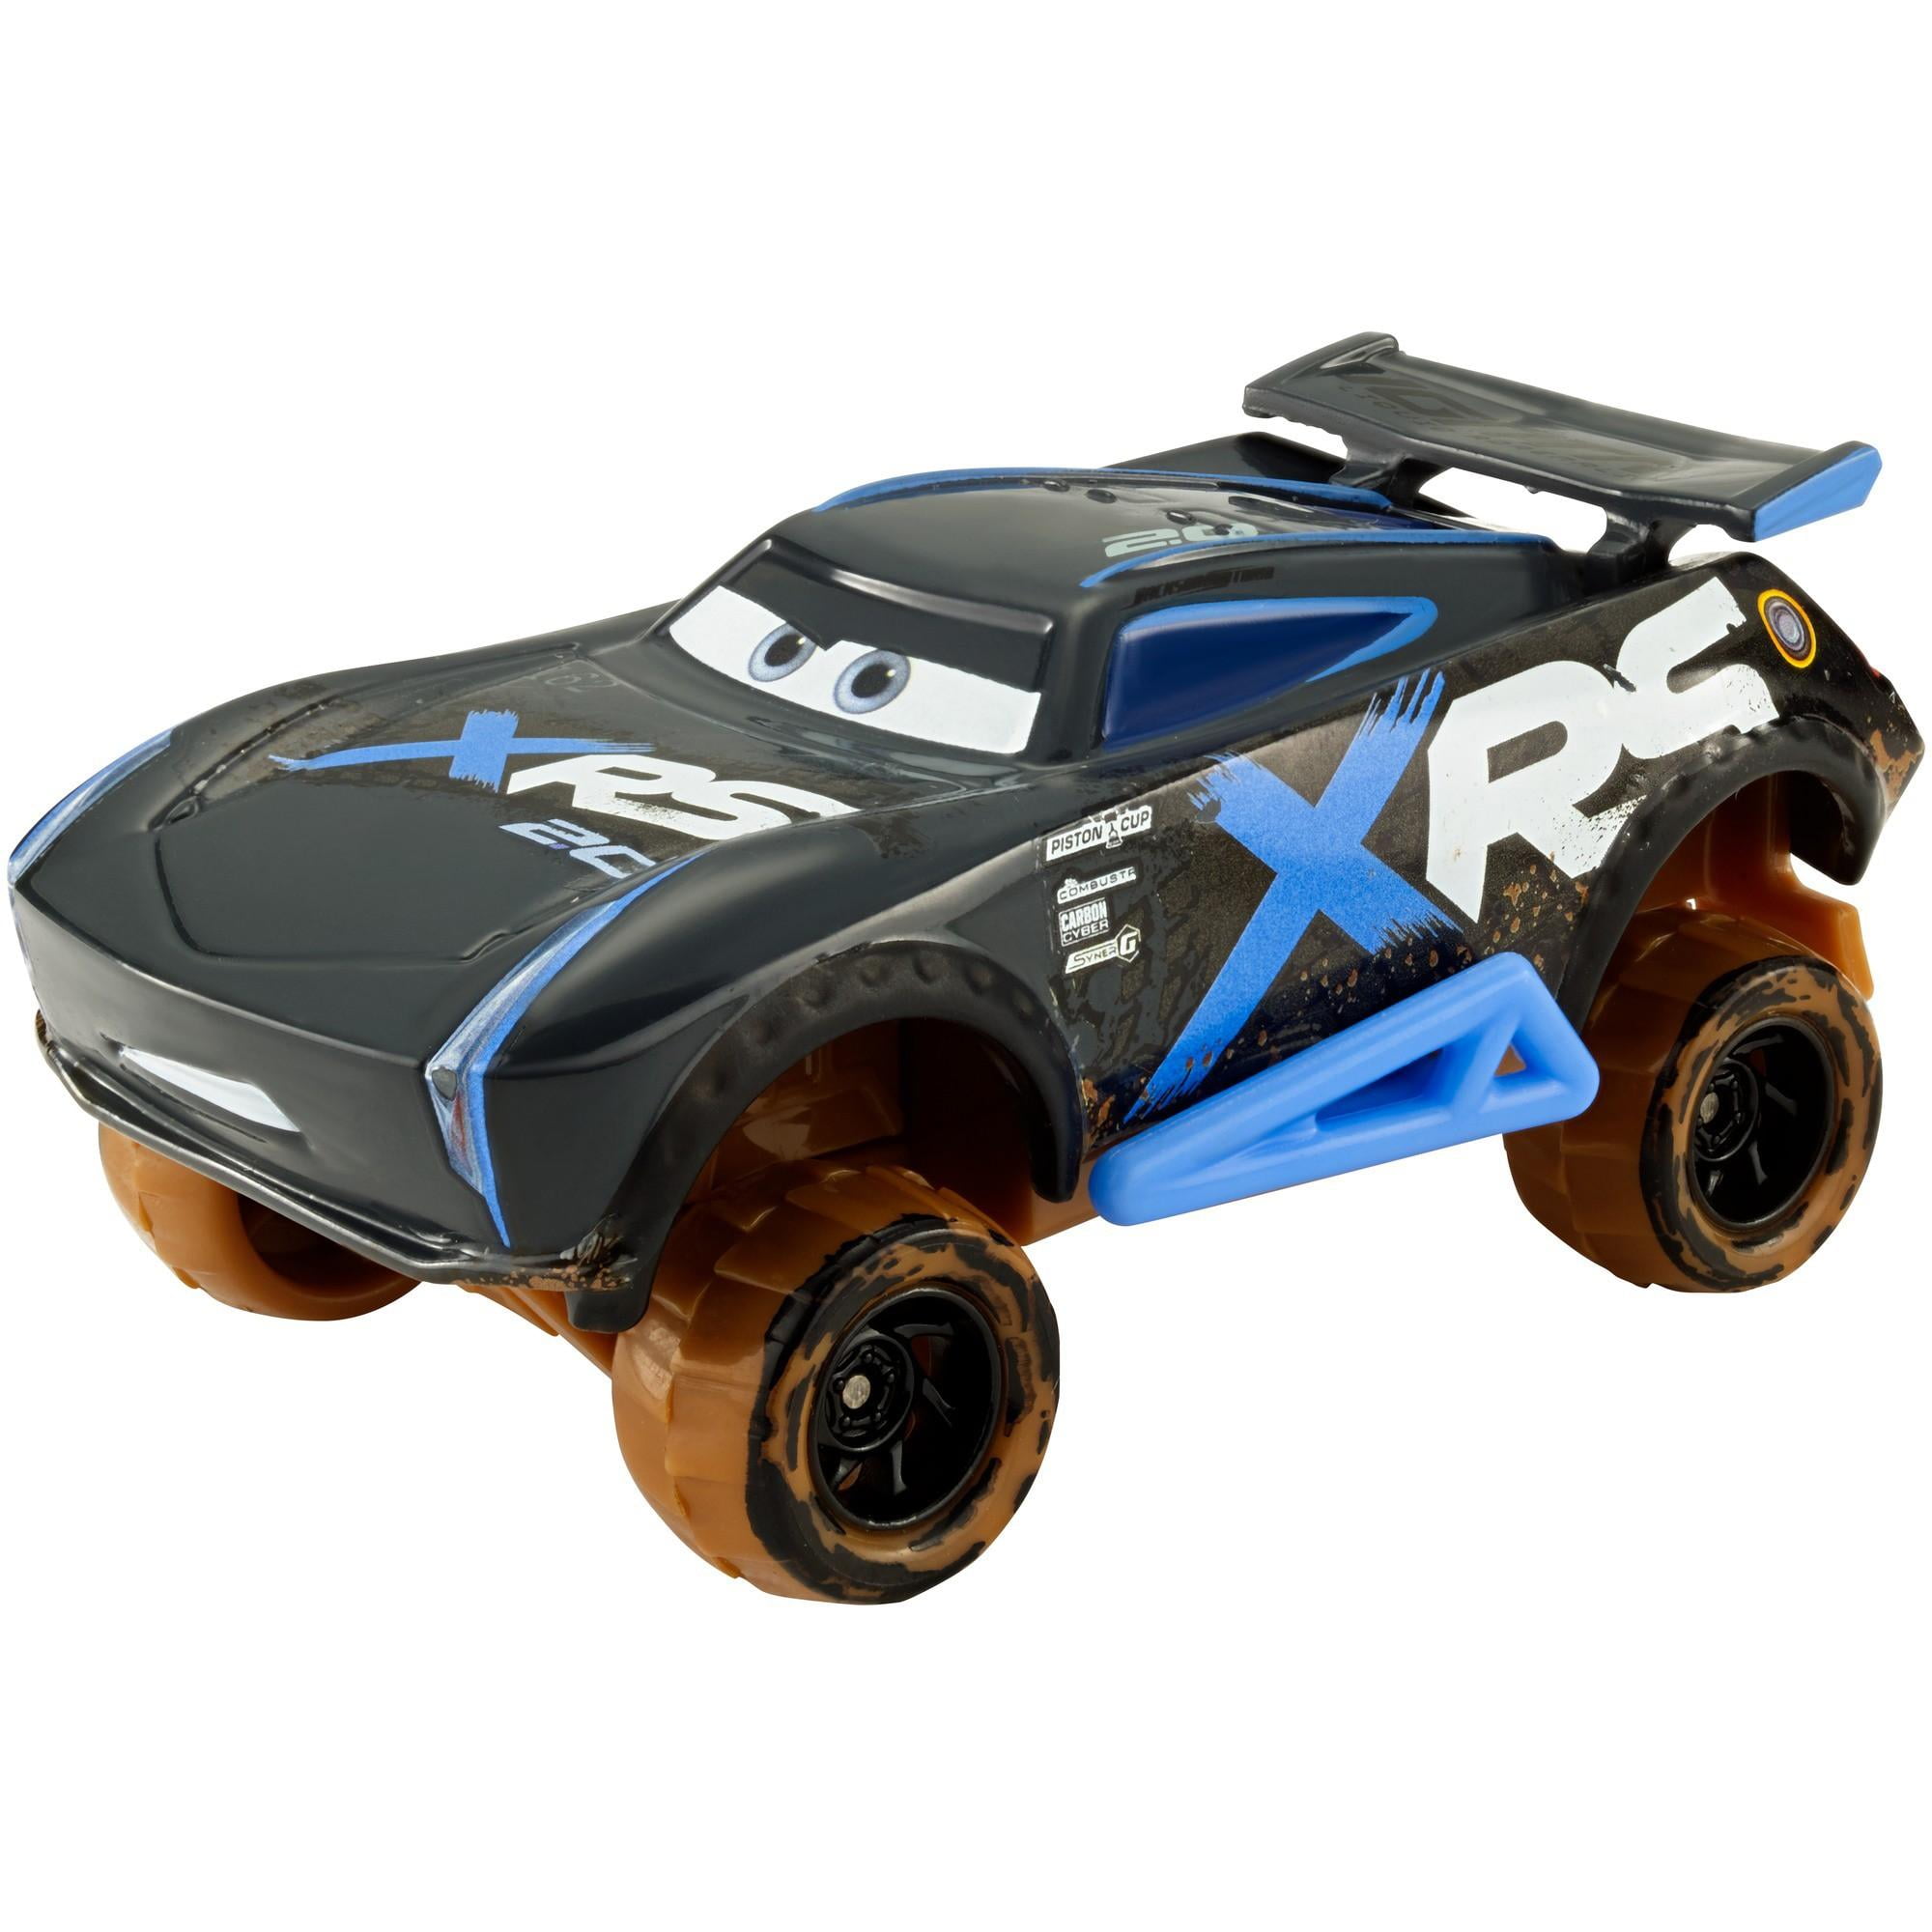 Mud Racing Big Air Drop Track Details about   Disney Pixar Cars XRS Mud Stunt Racing Playset 